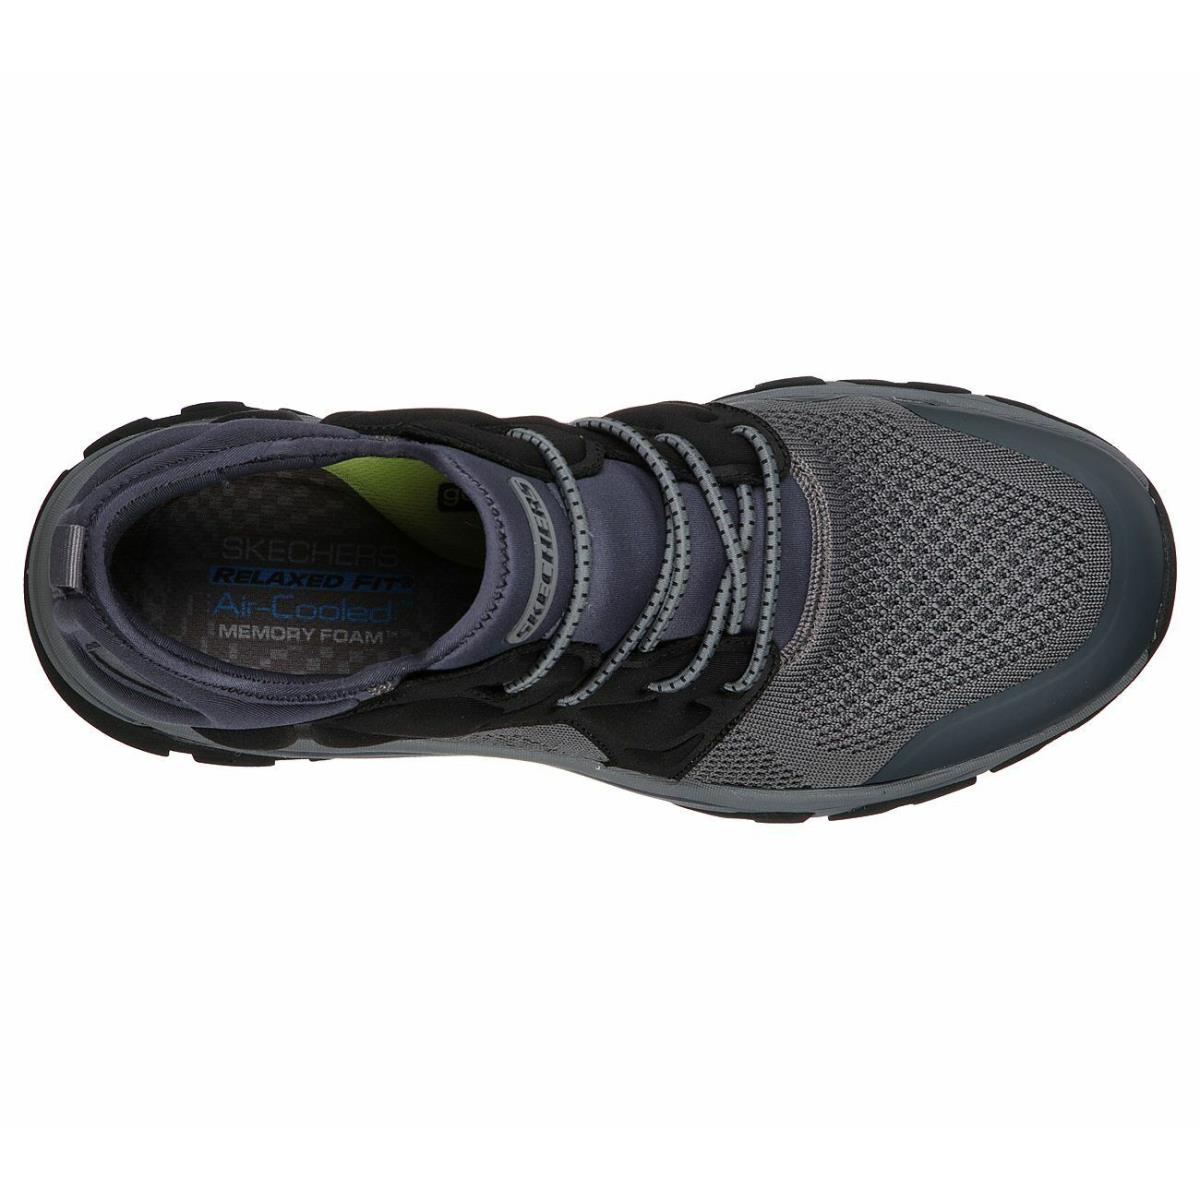 Skechers shoes Ralcon Stroman - Charcoal 0